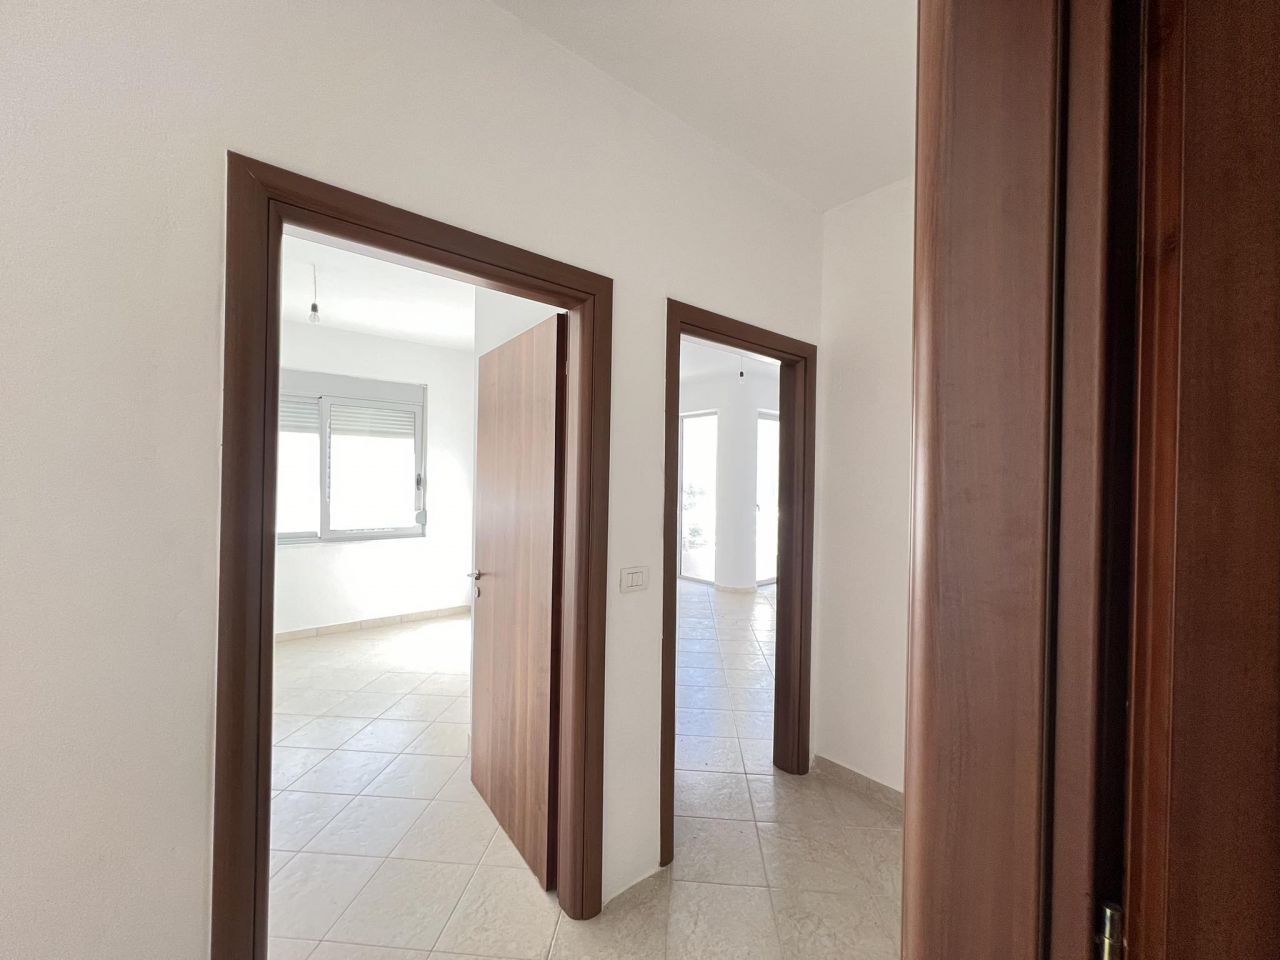 Two Bedroom Apartment For Sale In Saranda Albania 